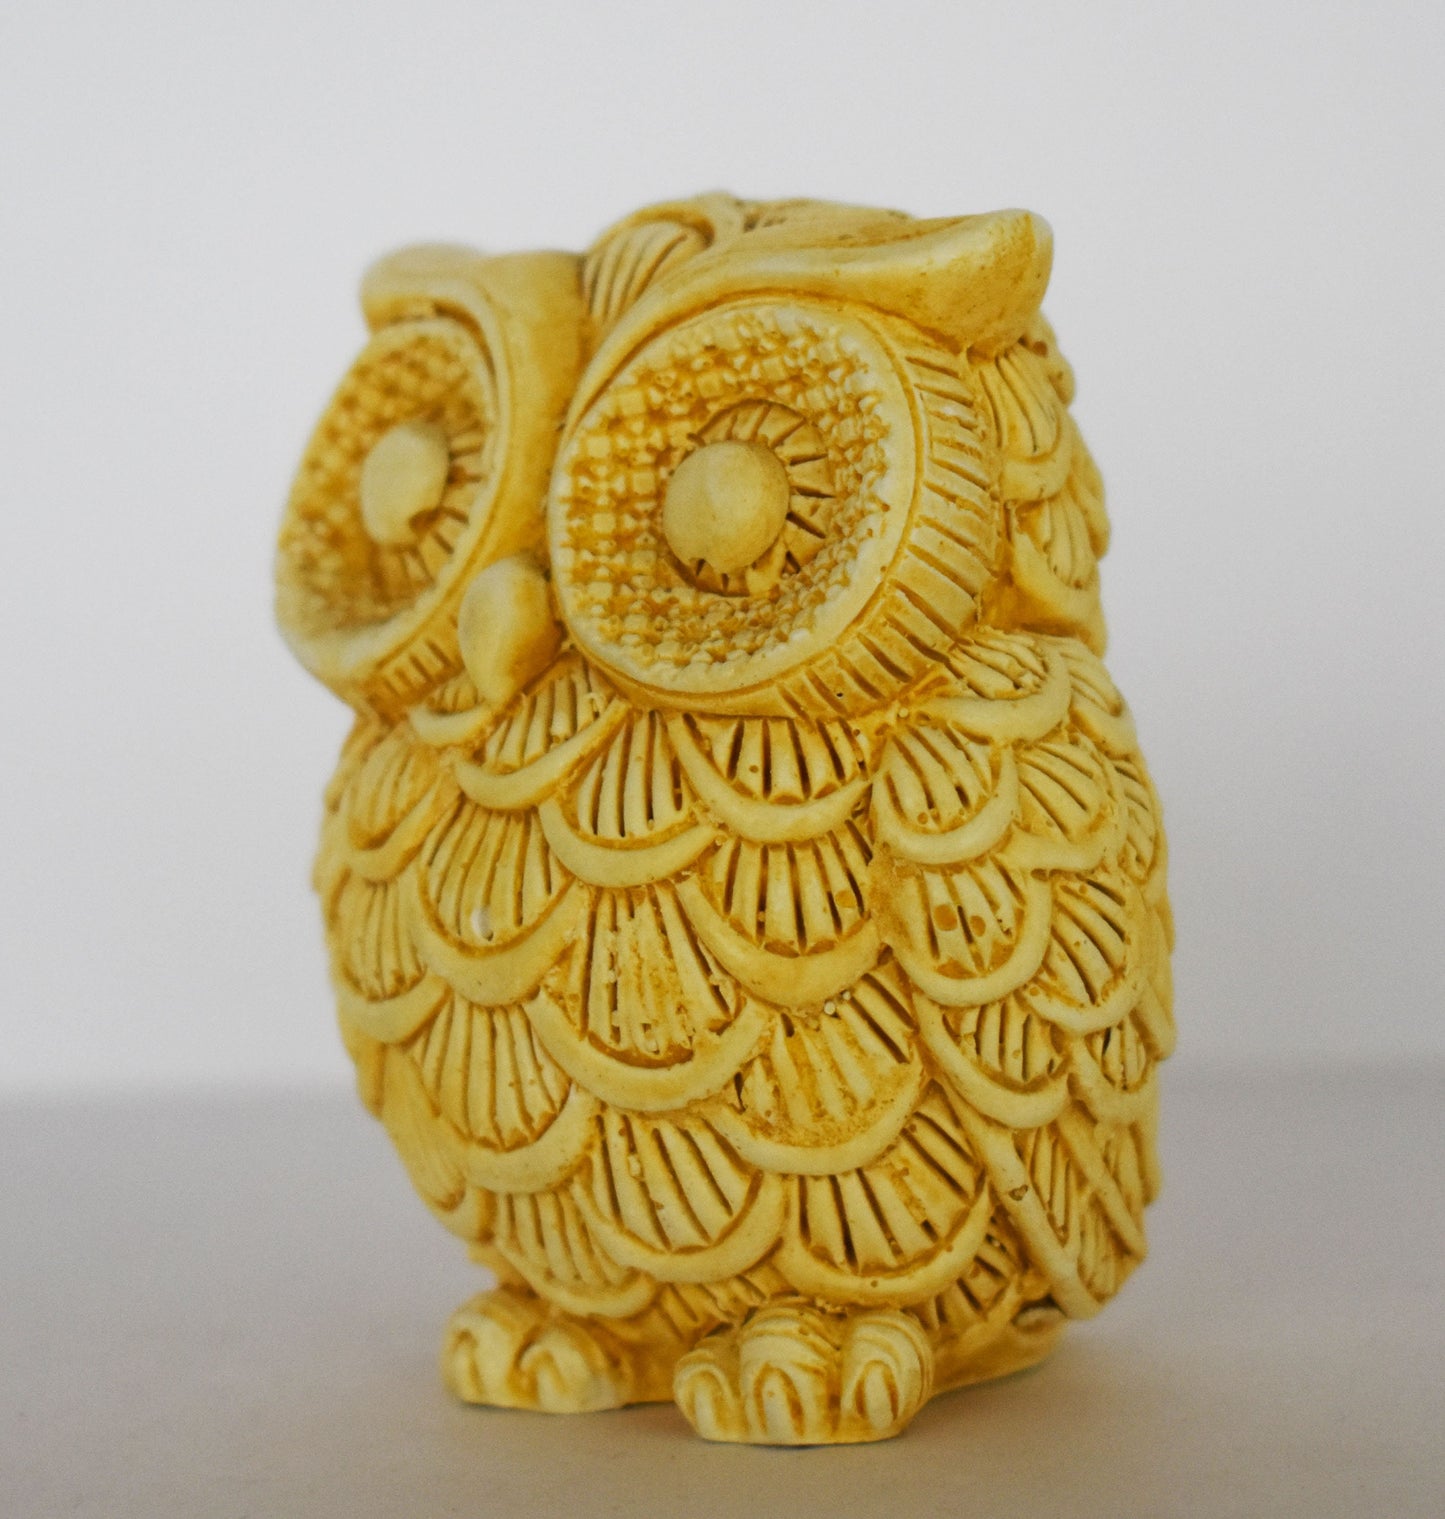 Athenian Owl - Small - Symbol of Wisdom, Knowledge, Erspicacity and Intelligence - Goddess Athena Minerva - Handmade - Casting Stone Statue